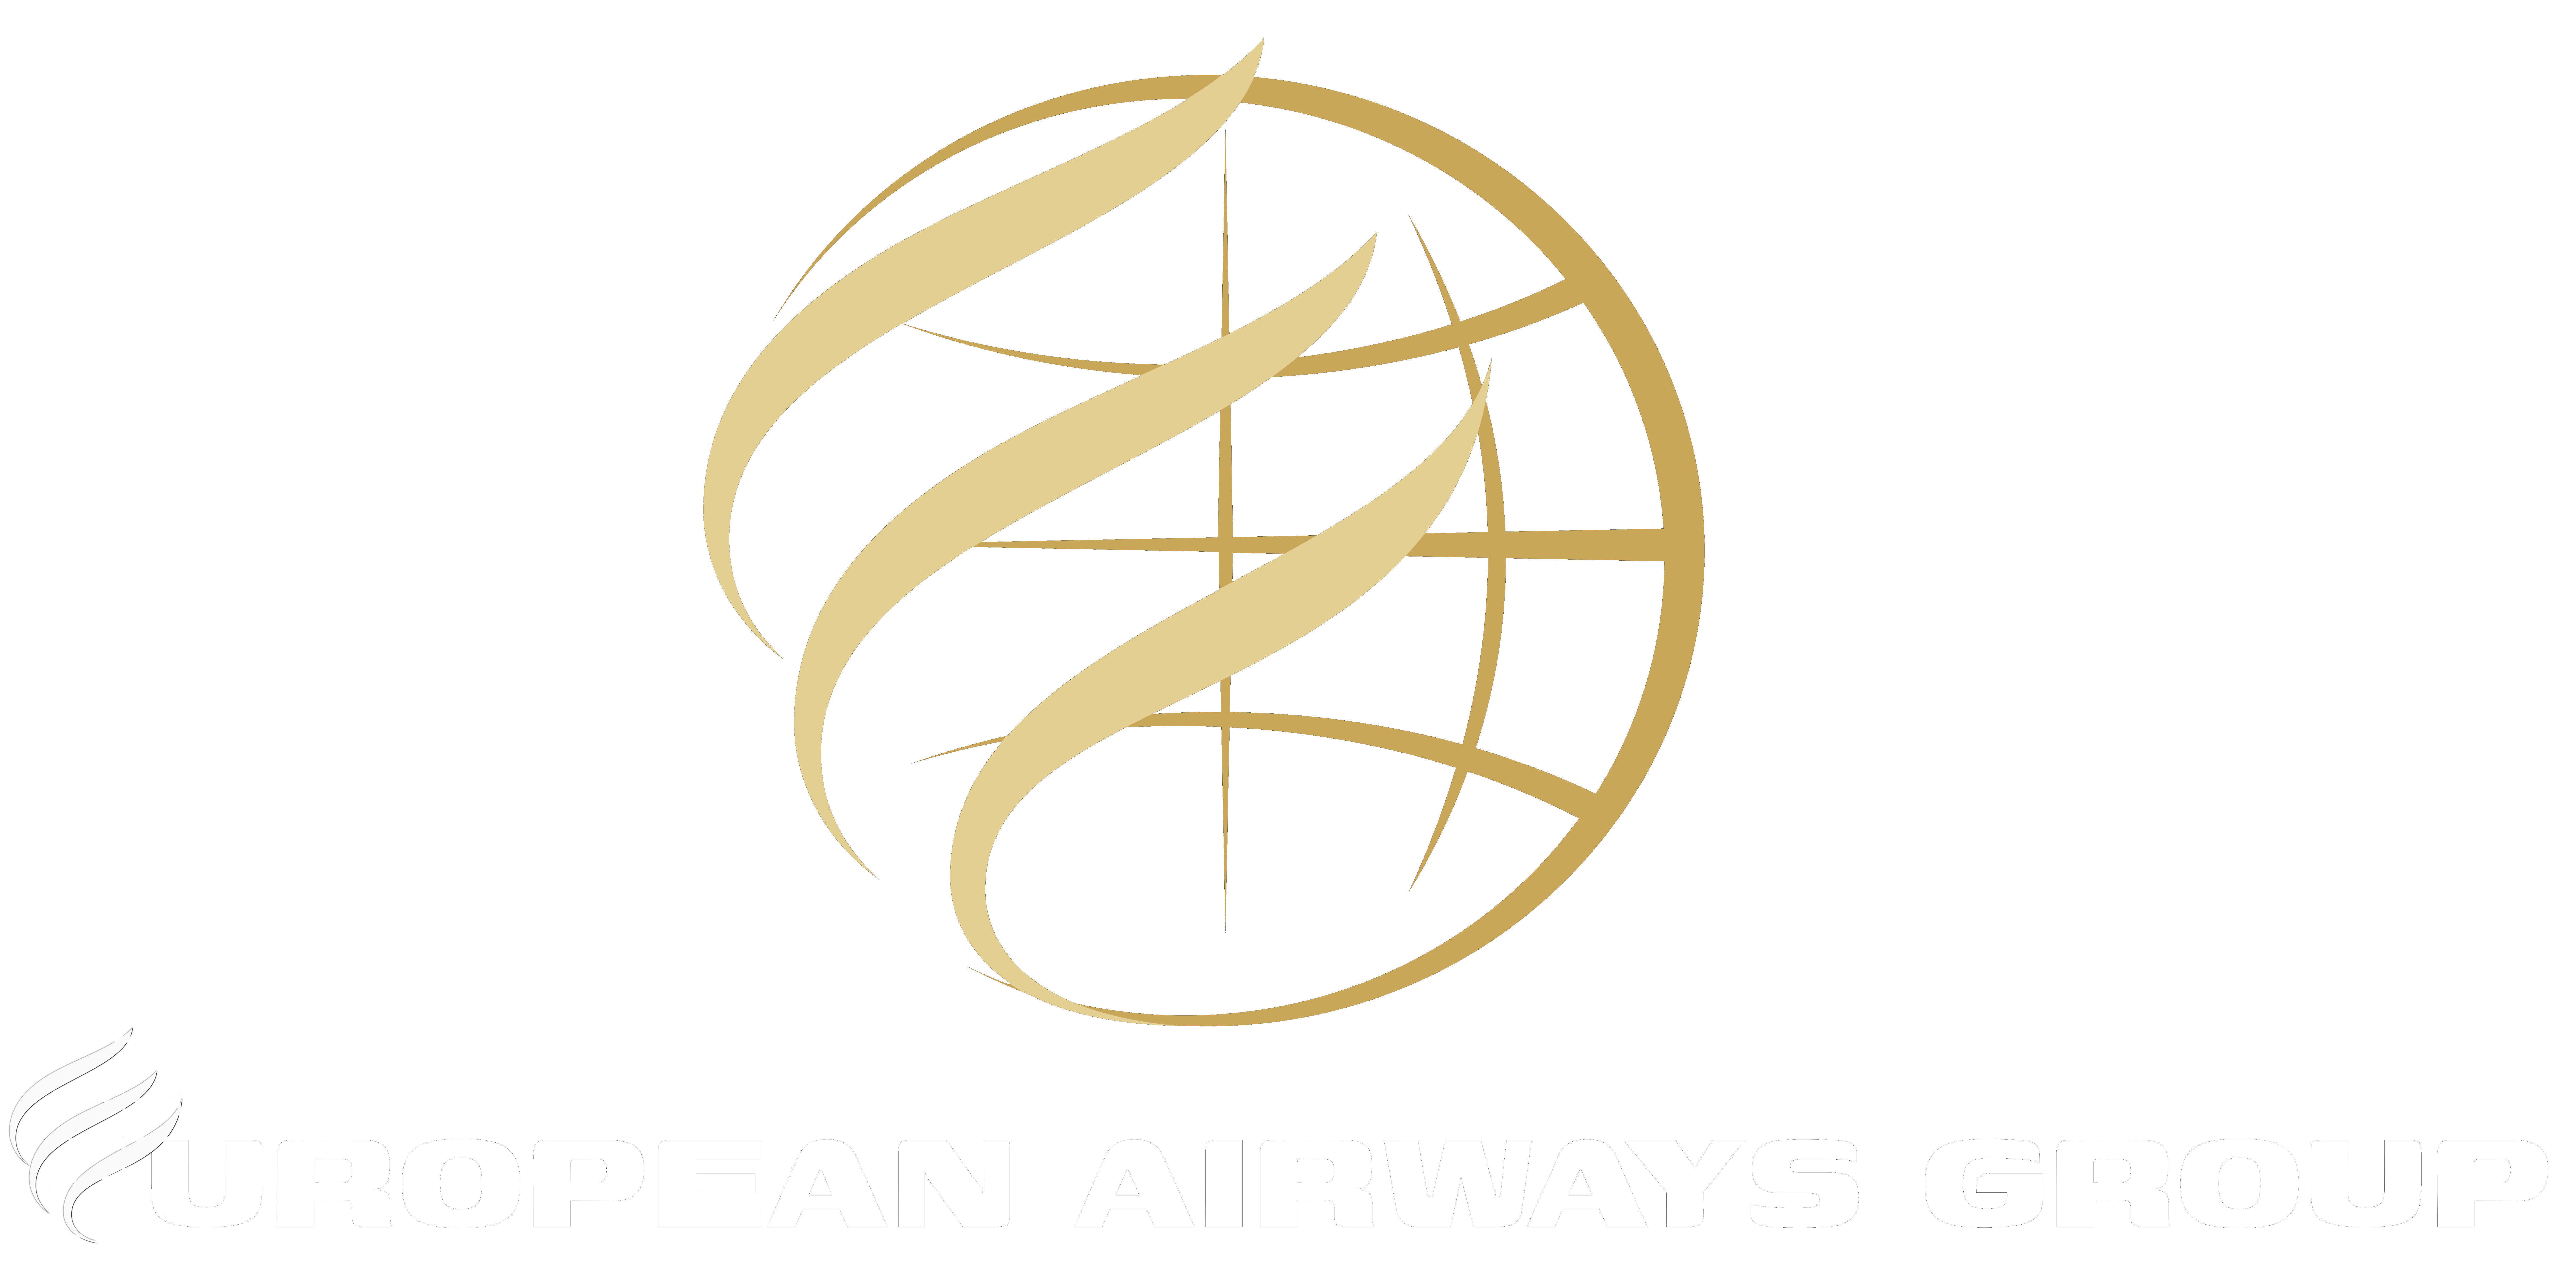 European Airways Group, VAG